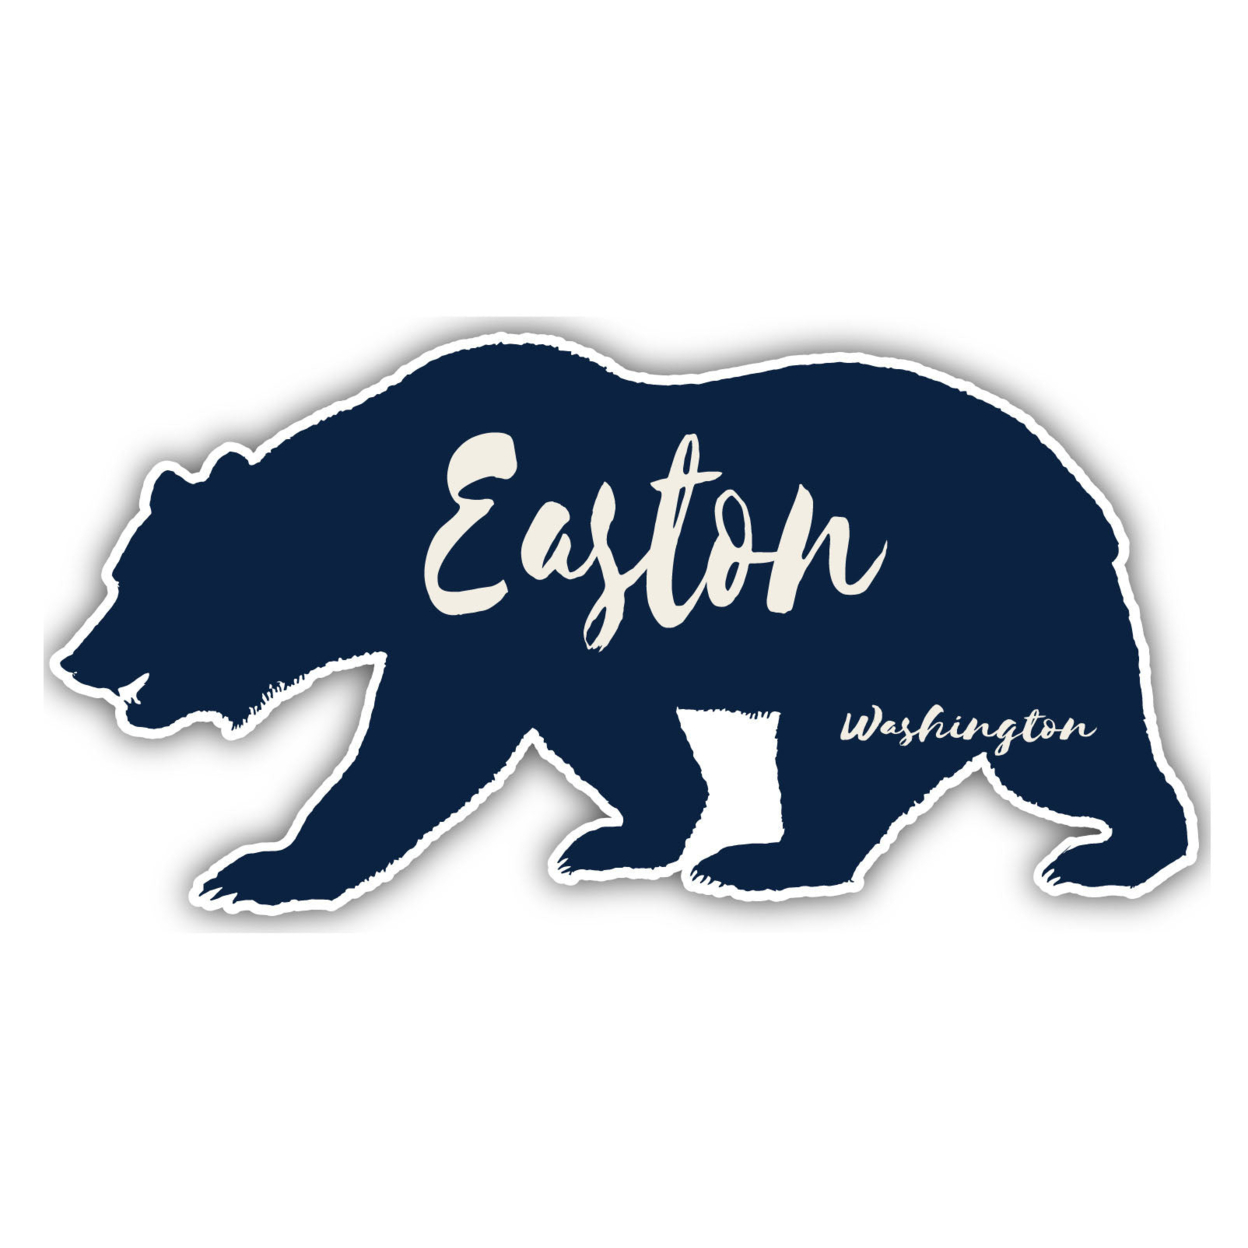 Easton Washington Souvenir Decorative Stickers (Choose Theme And Size) - Single Unit, 10-Inch, Camp Life